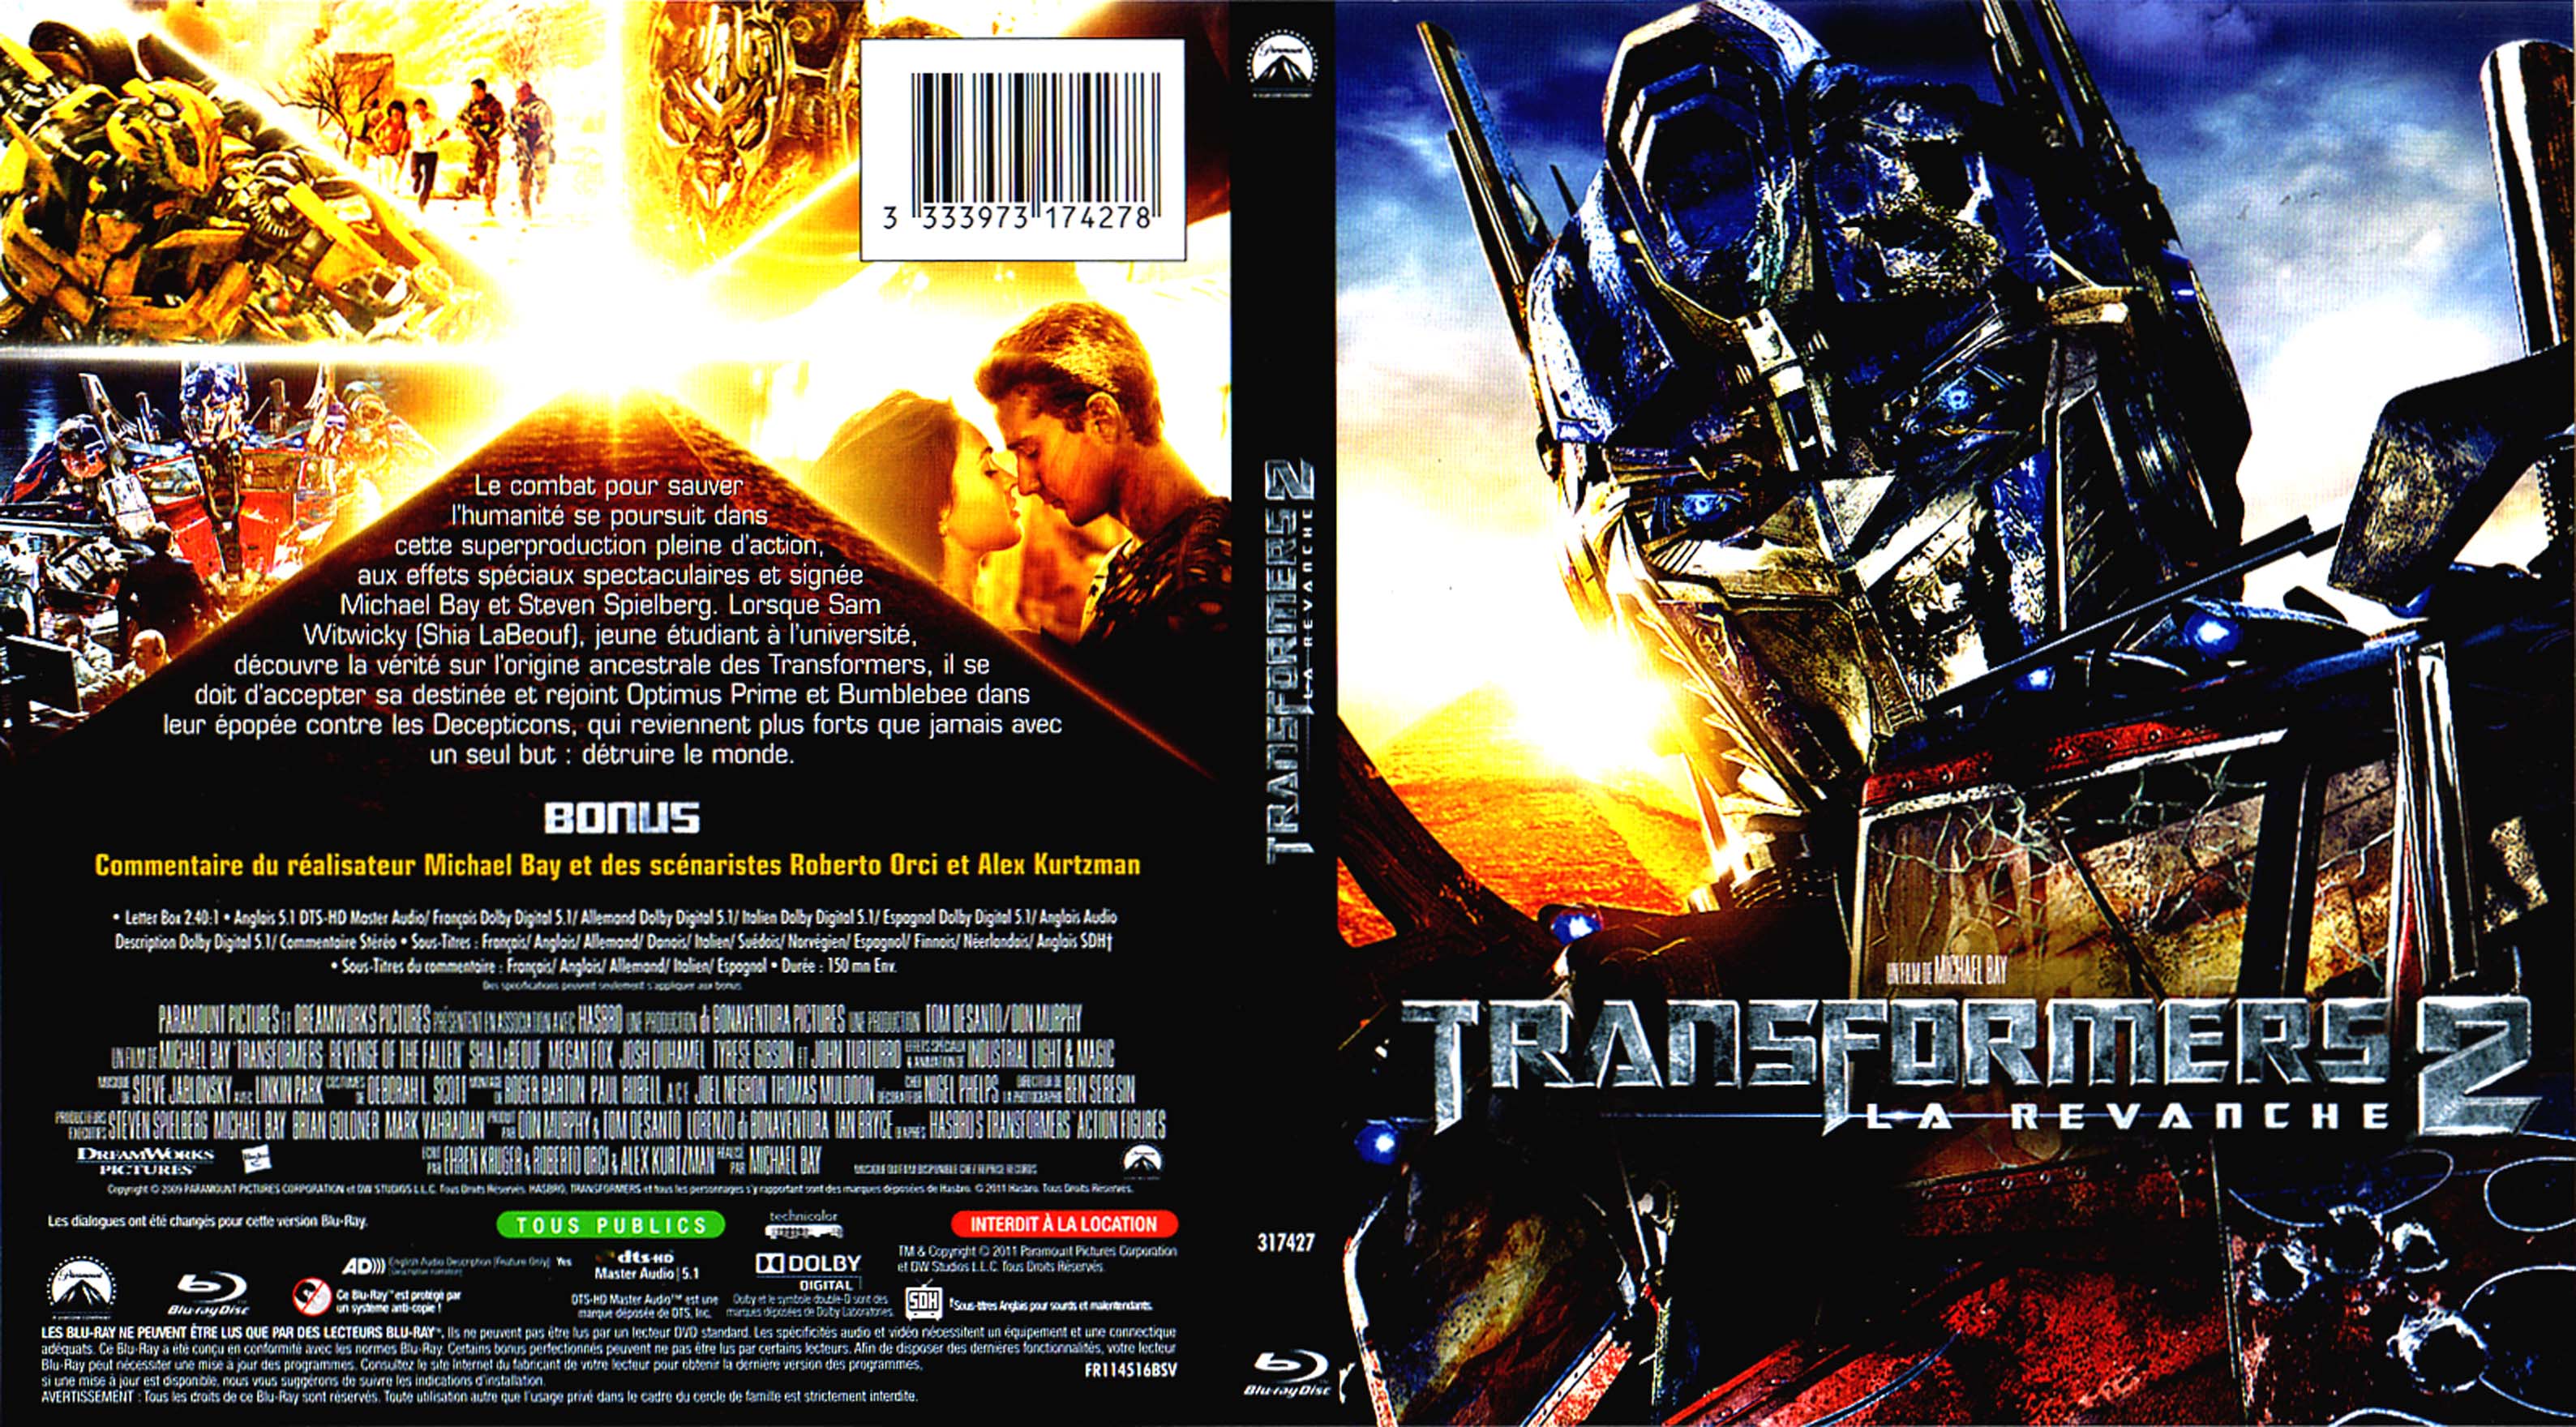 Jaquette DVD Transformers 2 (BLU-RAY) v3